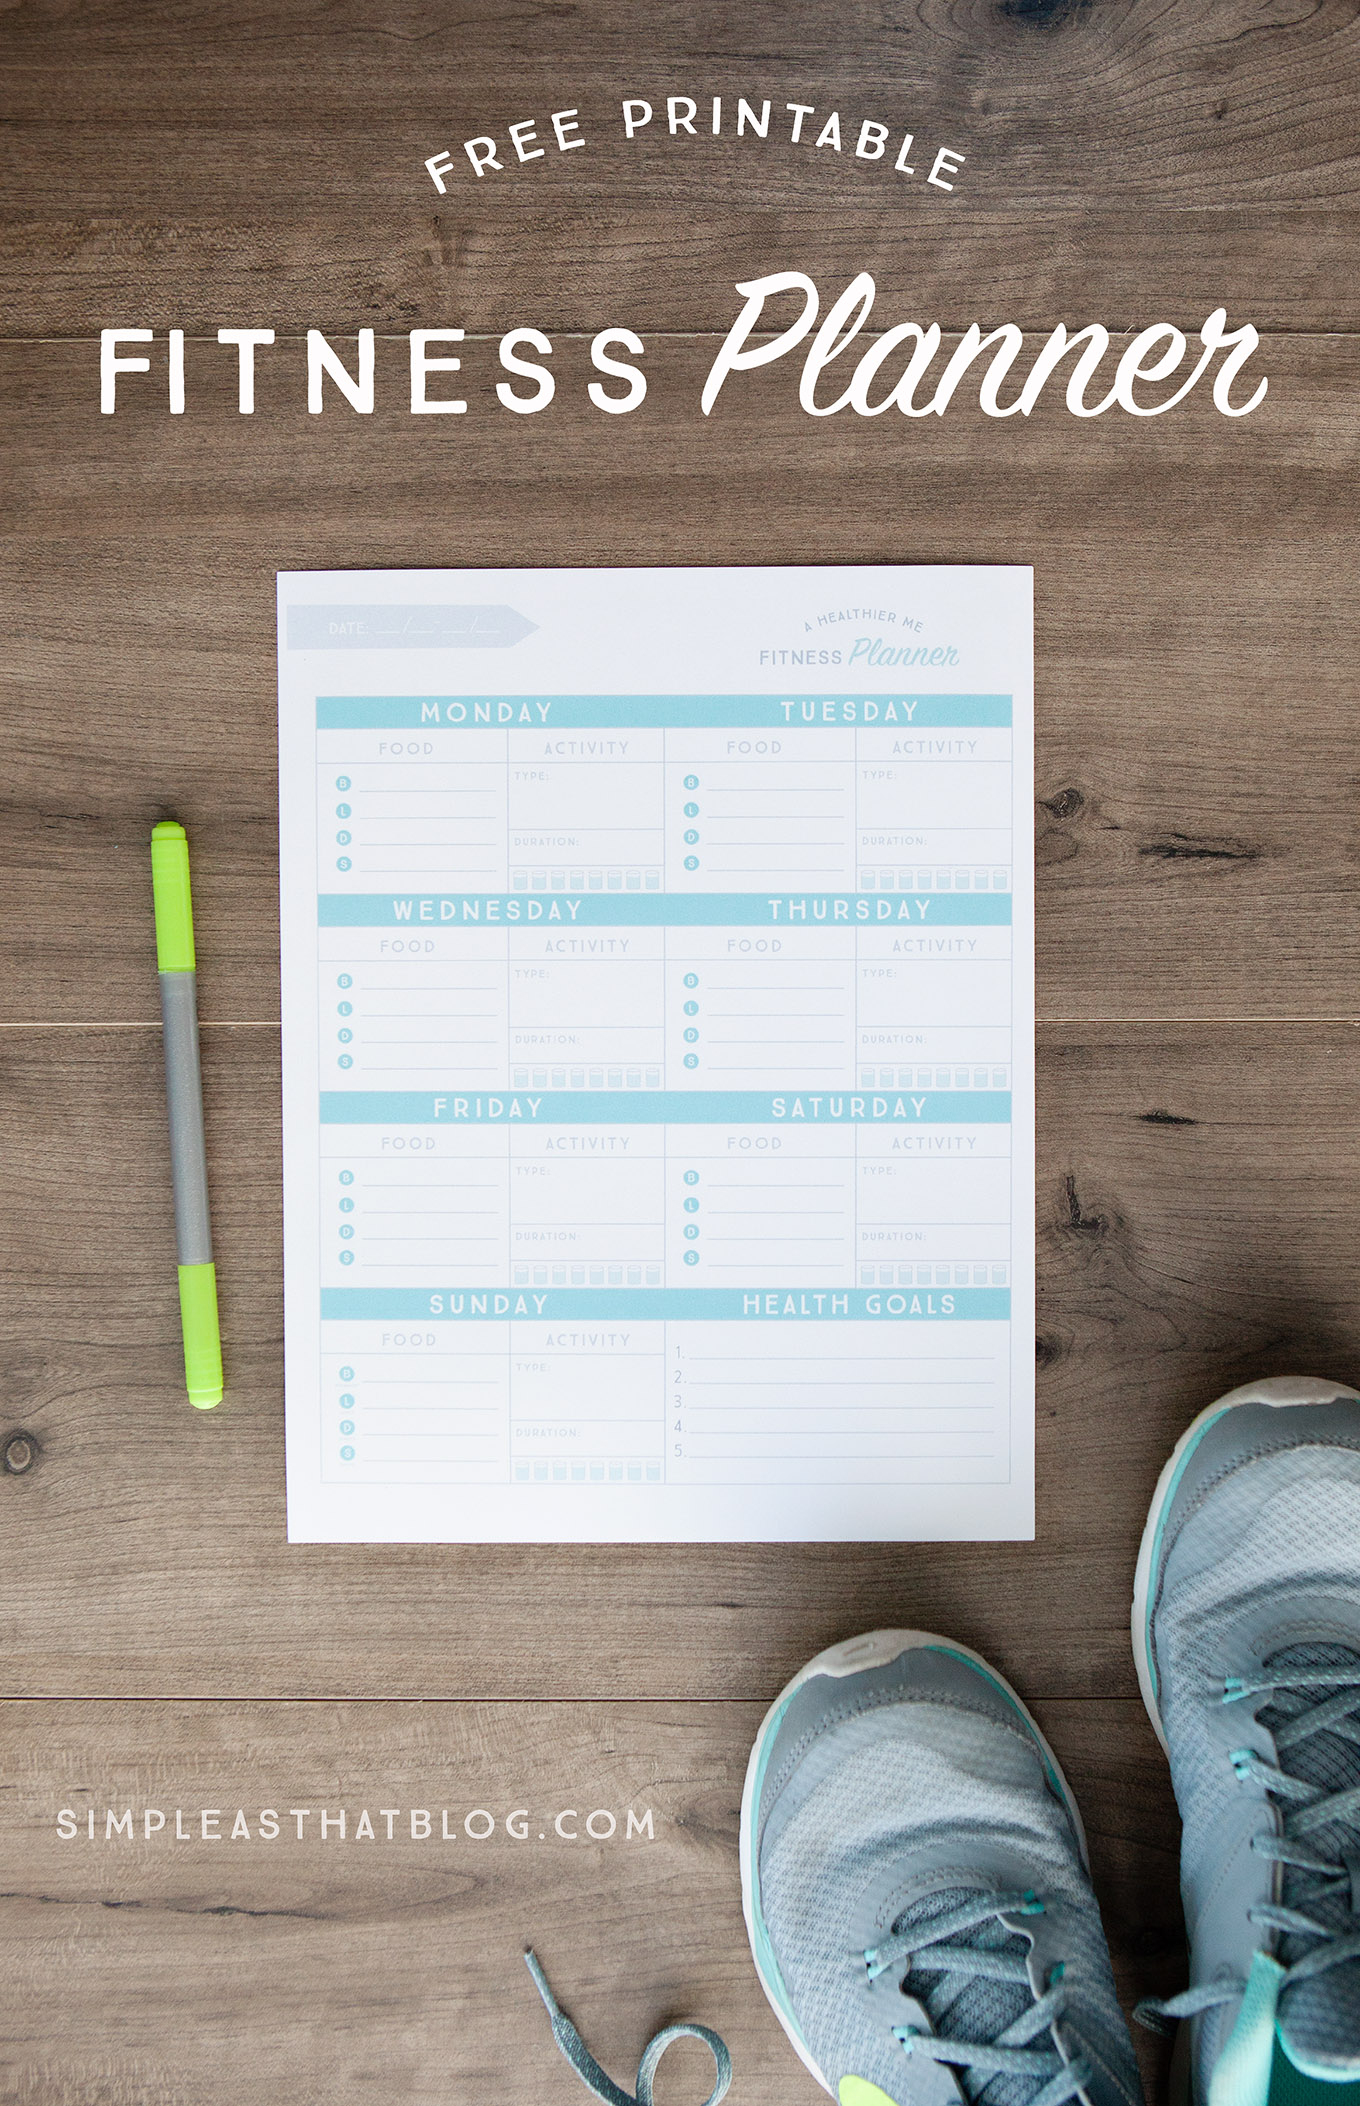 Free Printable Fitness Planner - Free Printable Fitness Planner